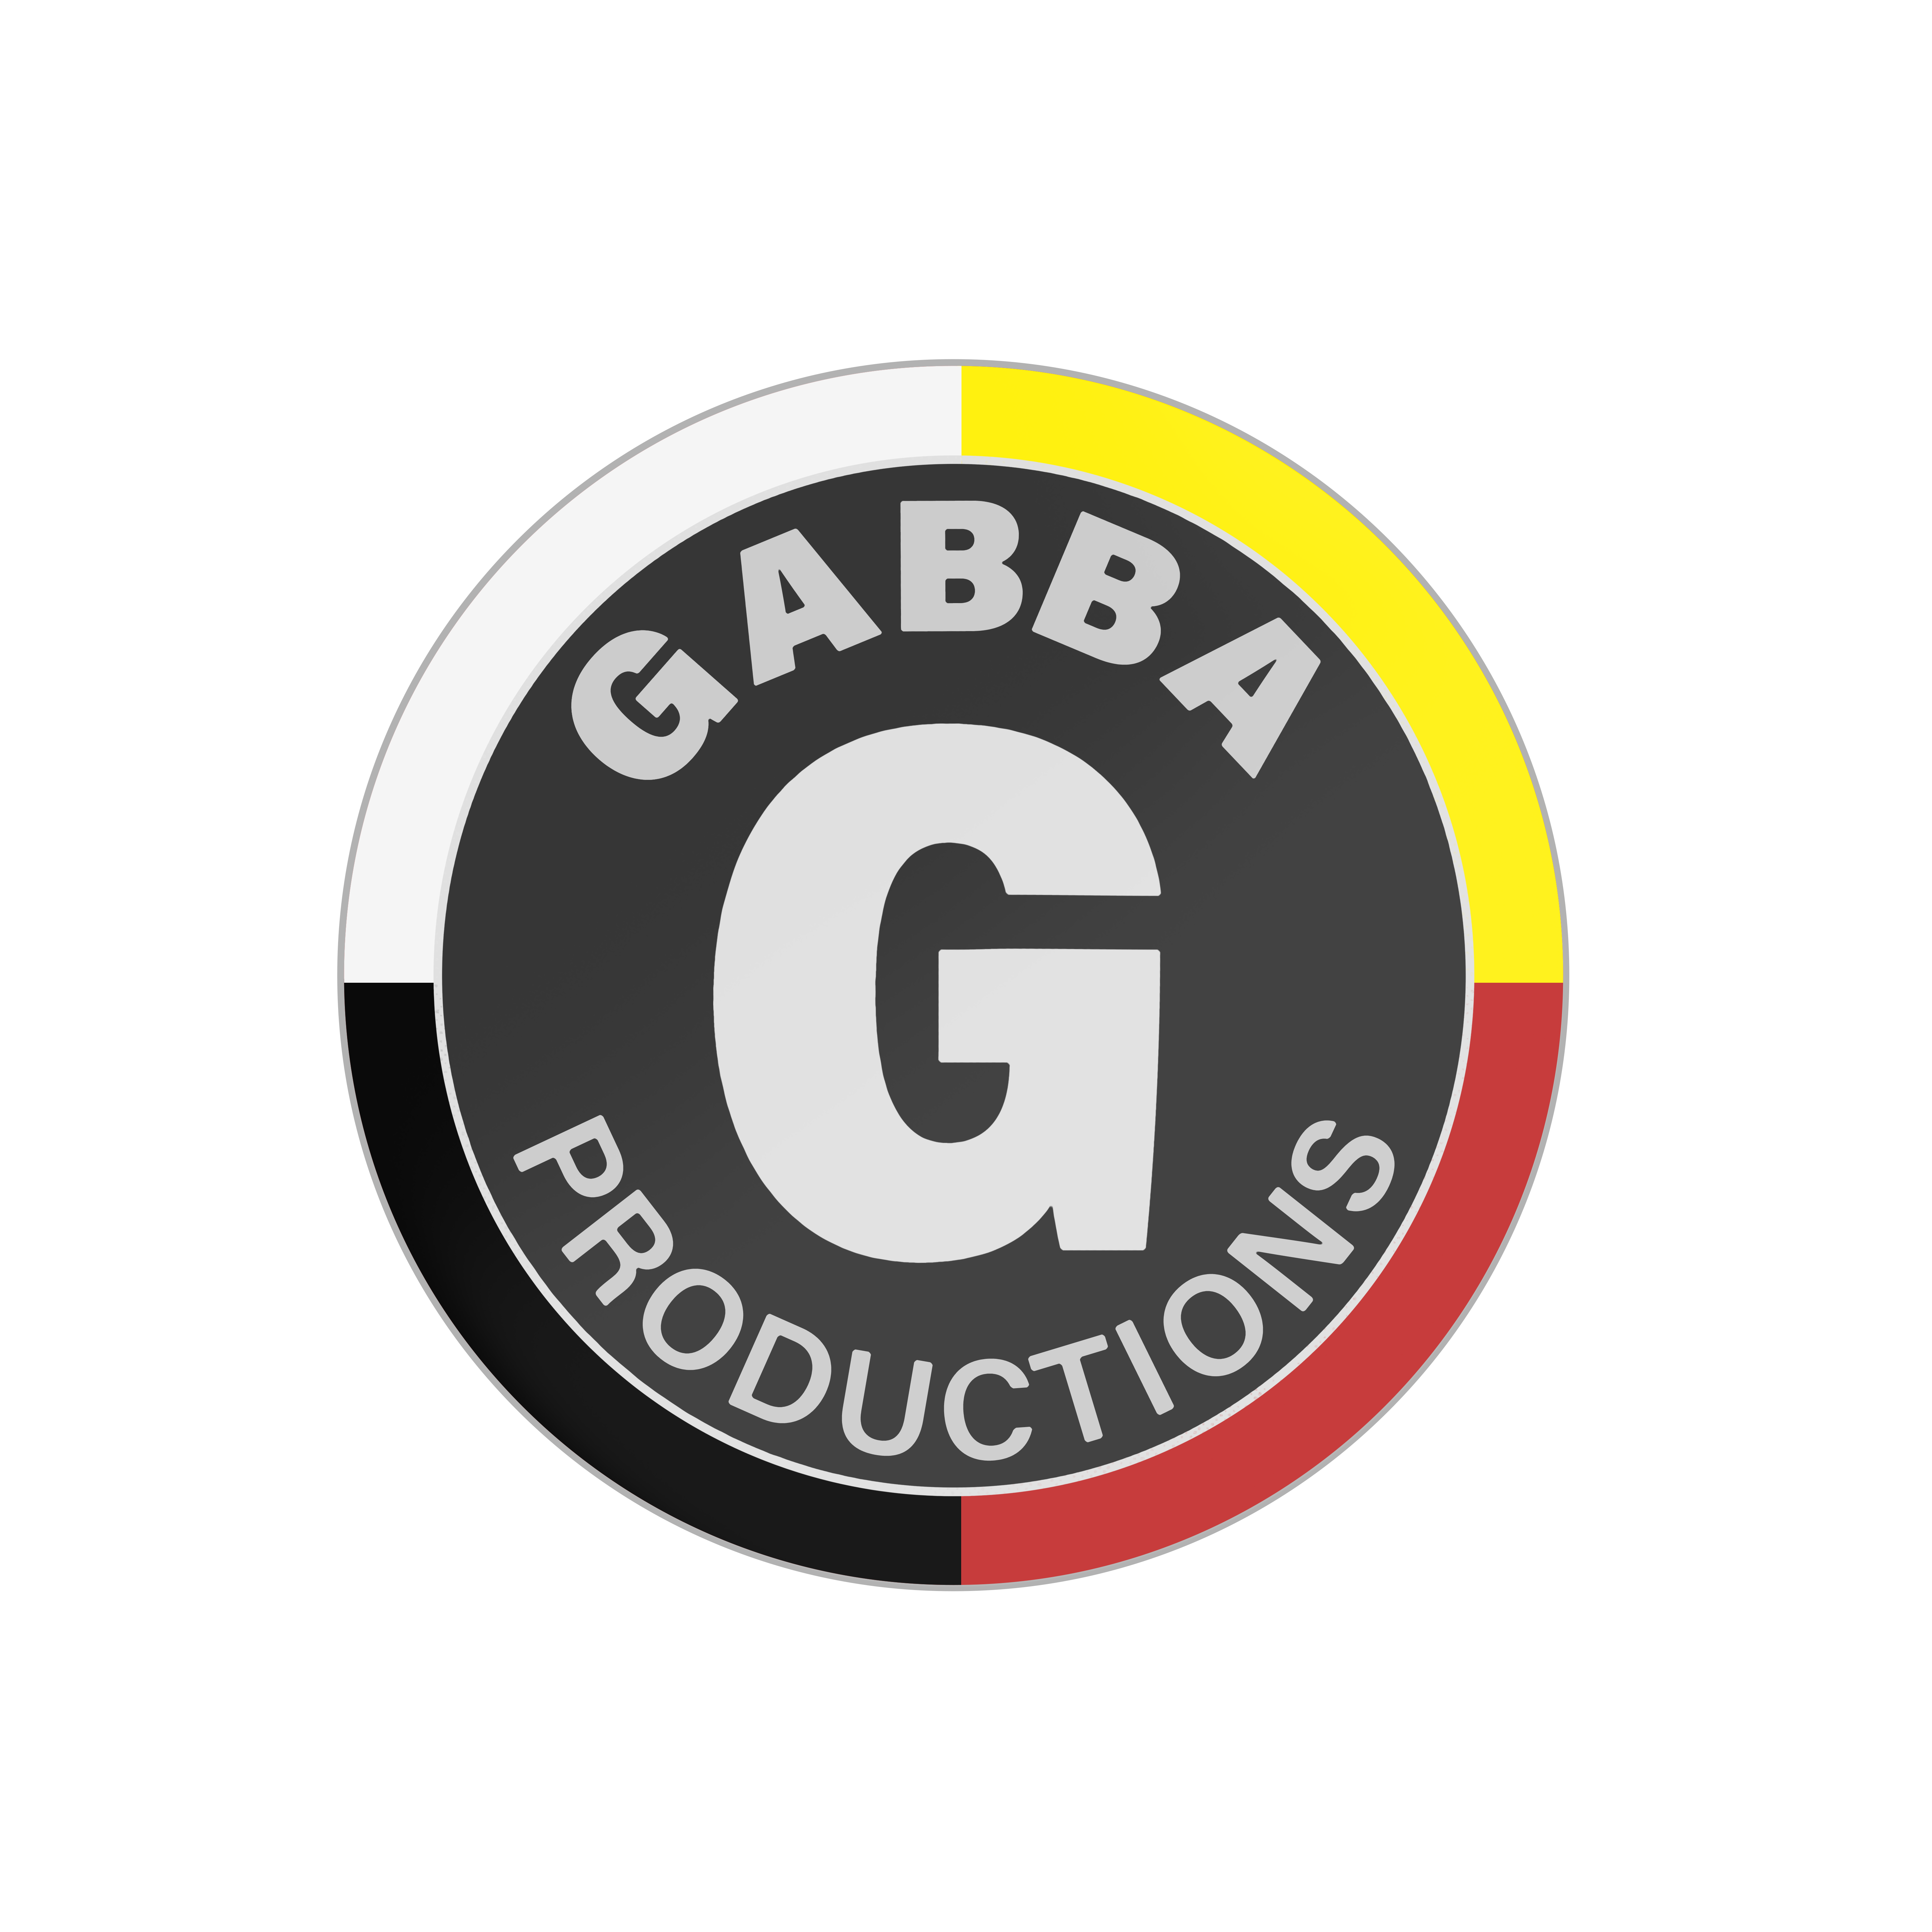 Gabba Productions